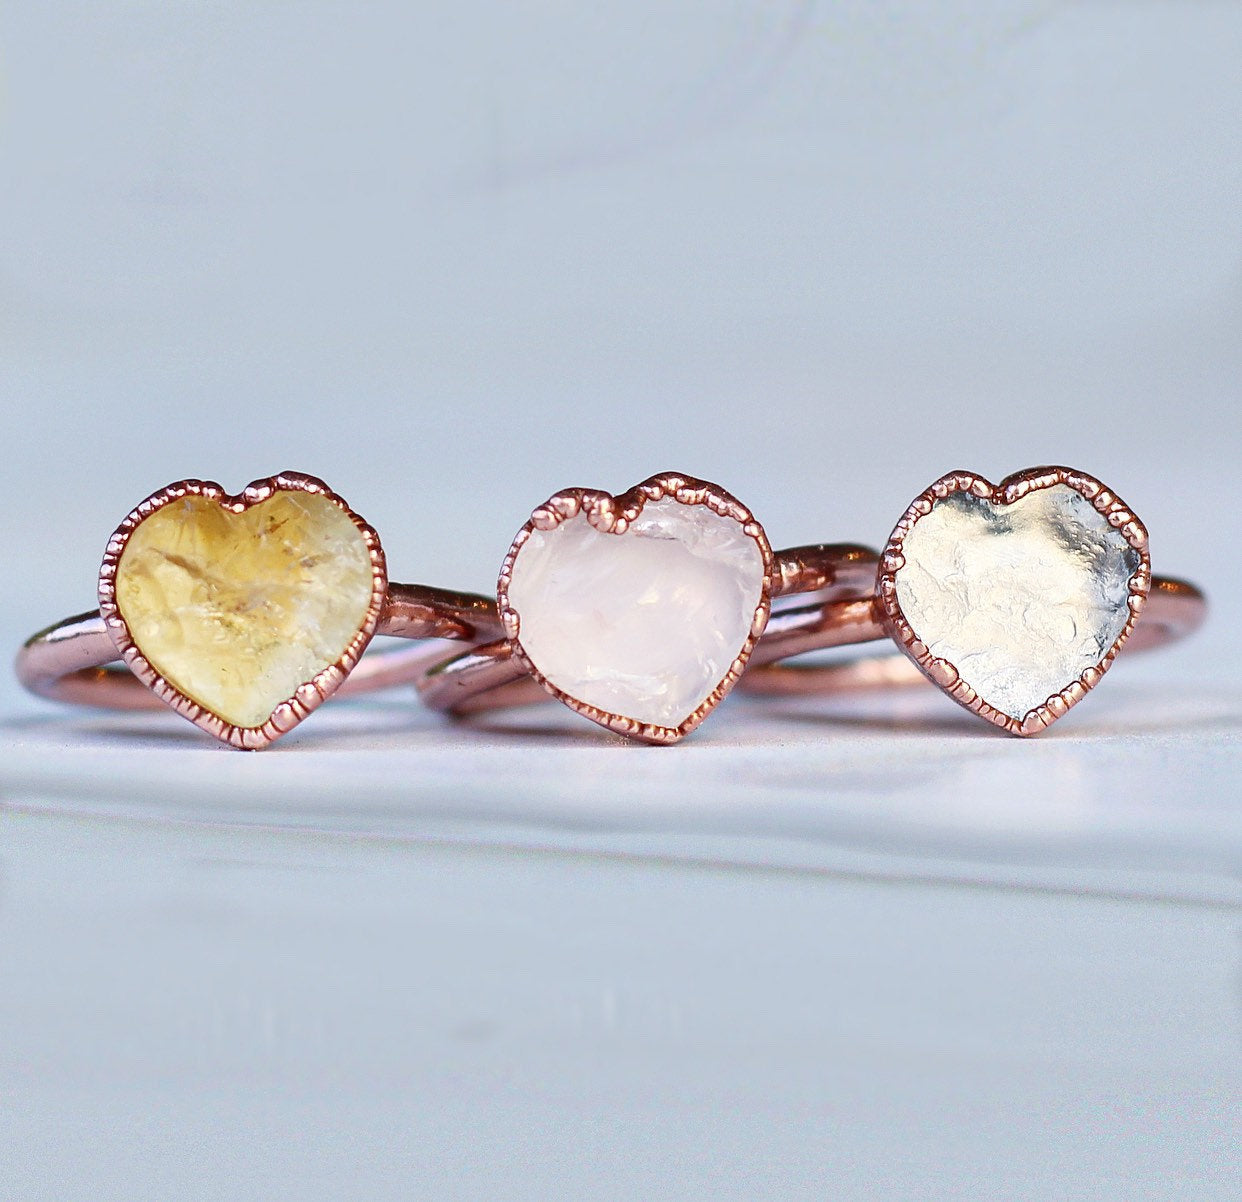 Crystal Quartz Heart Ring, Heart Shaped Crystal Ring, Crystal Heart Gemstone Ring, Crystal Heart Jewelry, Dainty Heart Stone Ring